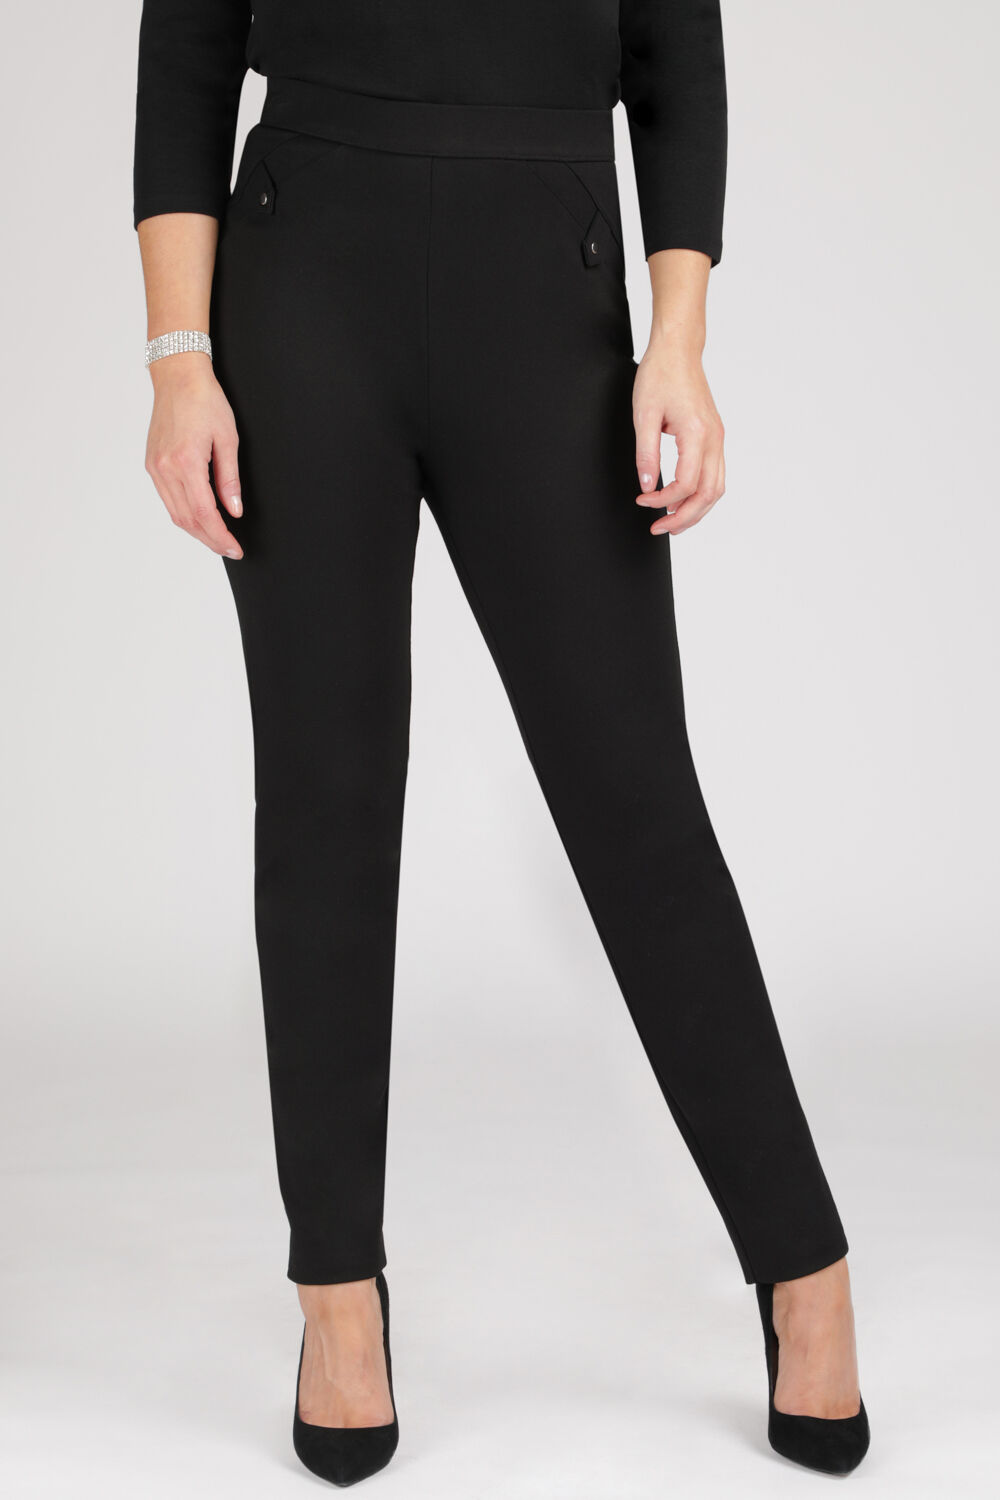 Bonmarche Black Slim Fit Ponte Elasticated Trousers, Size: 28